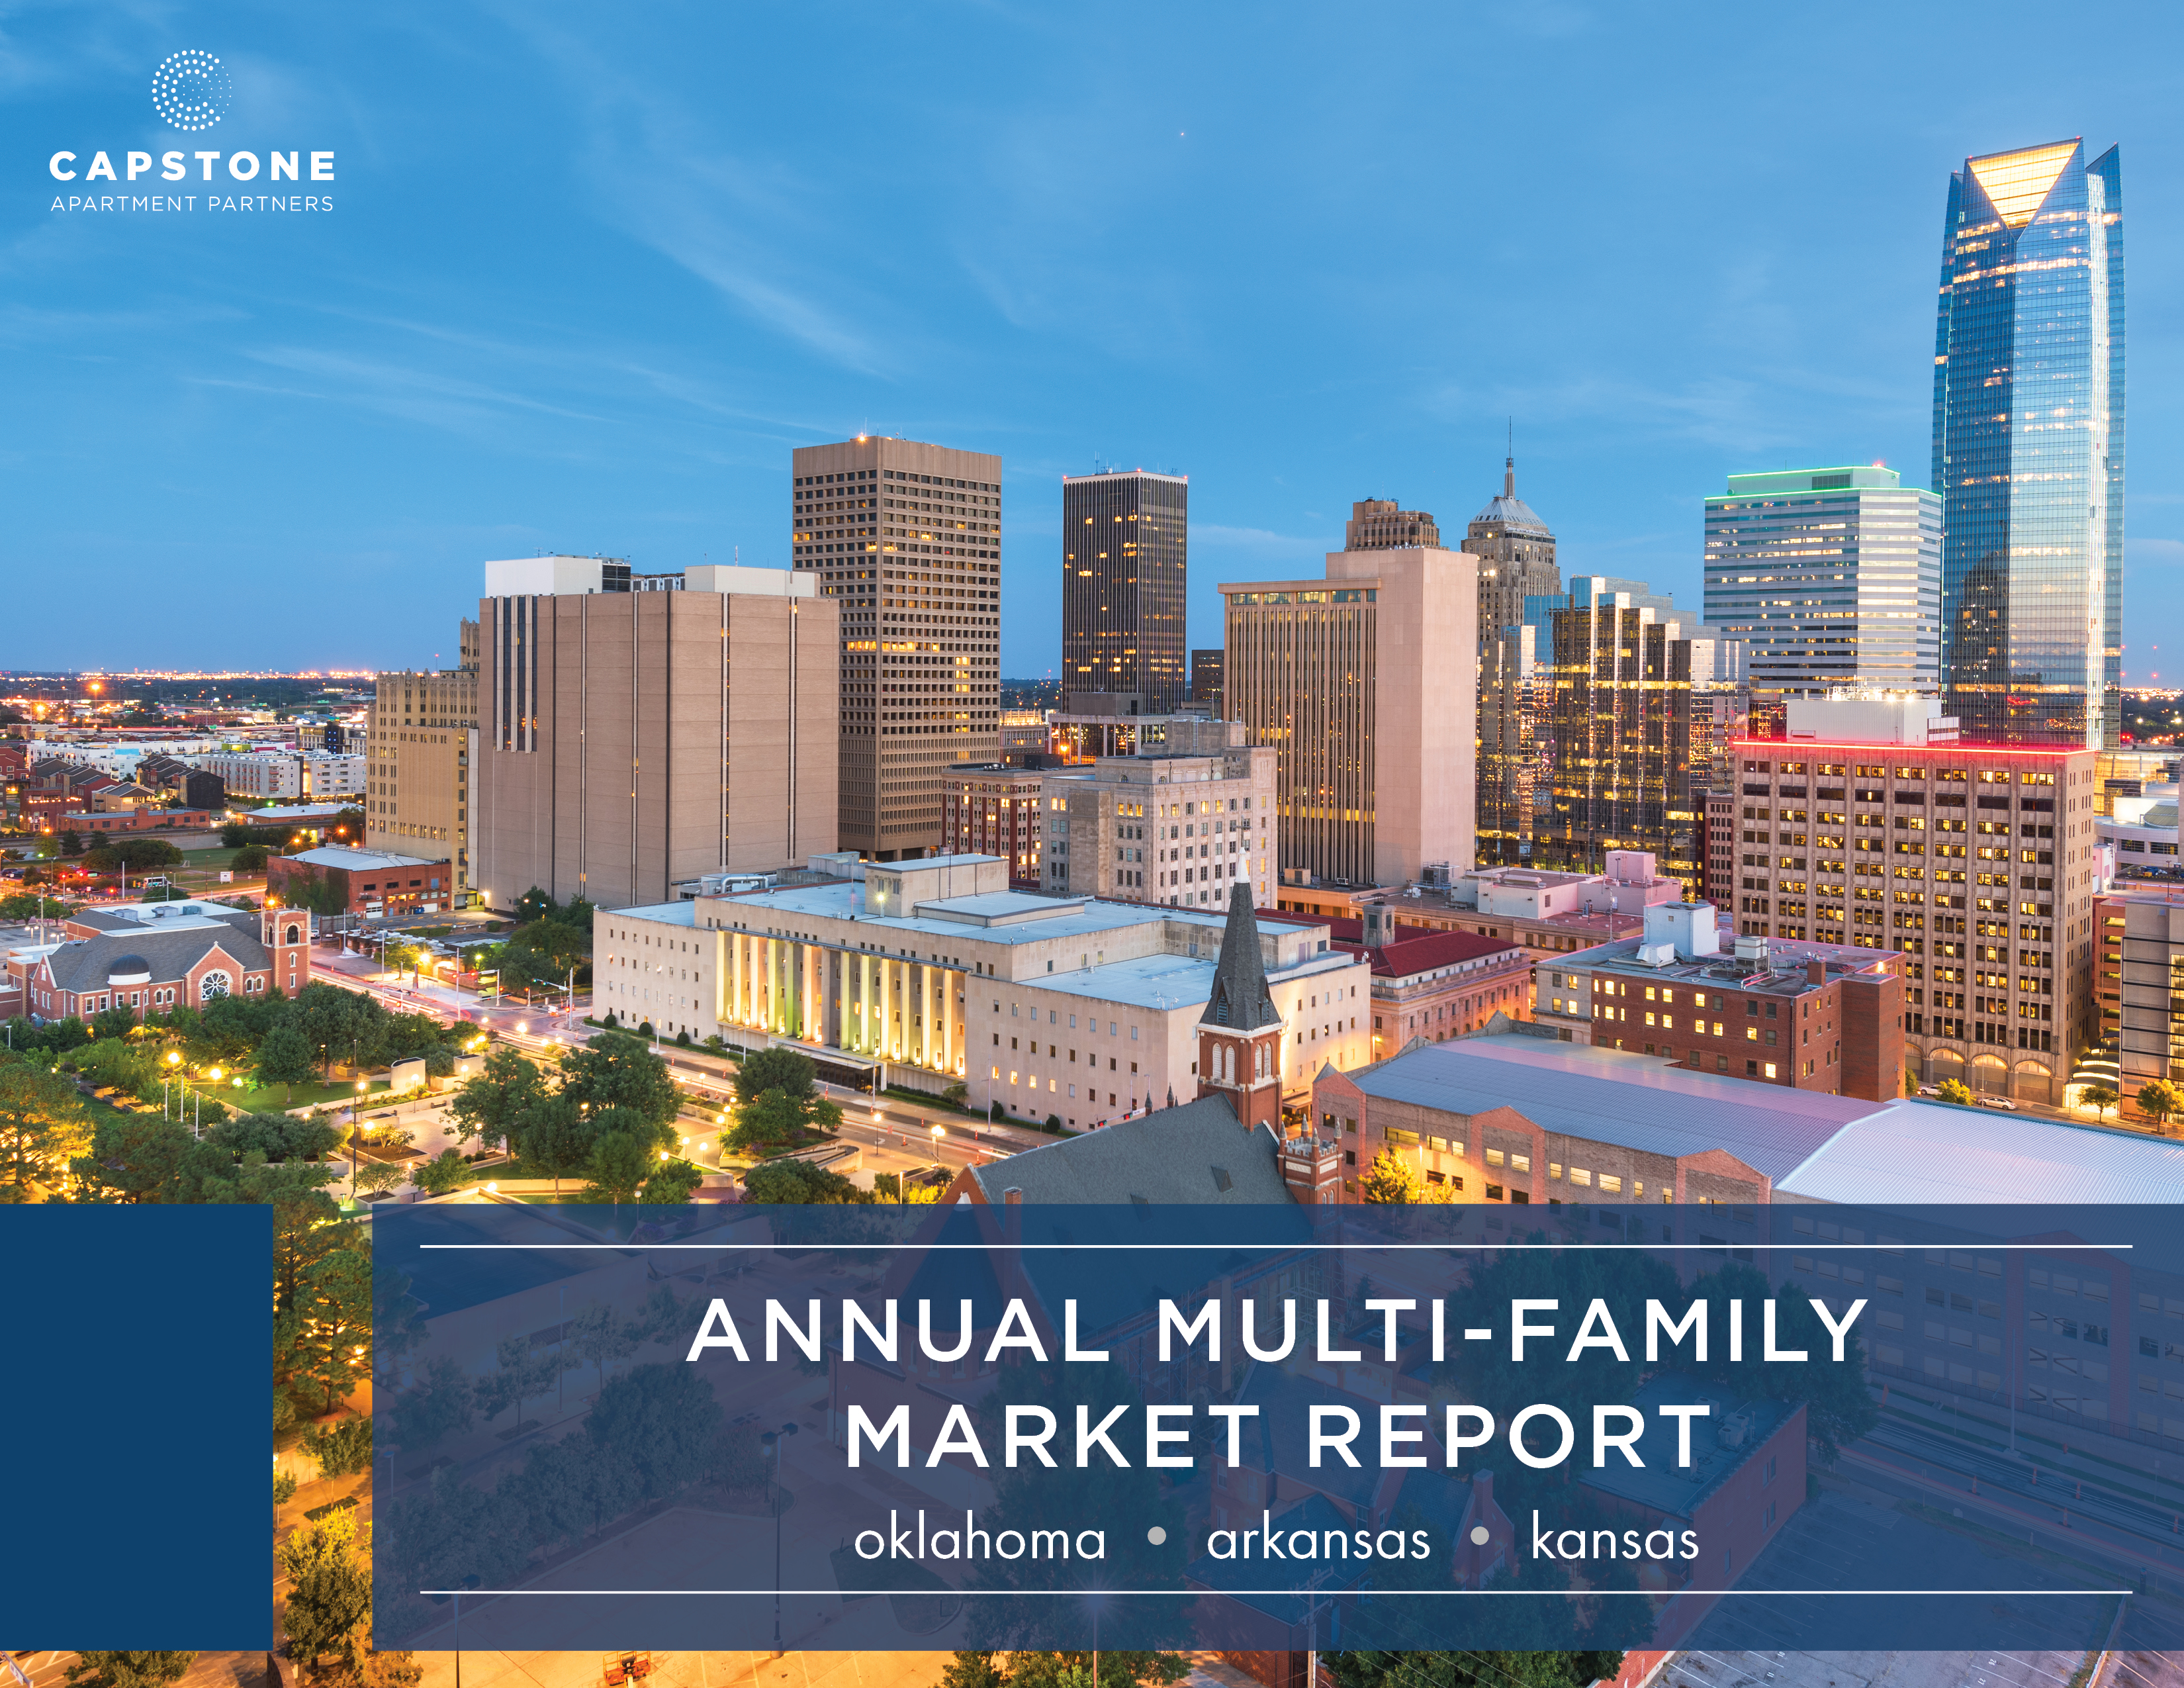 Market report cover for Oklahoma, Arkansas and Kansas